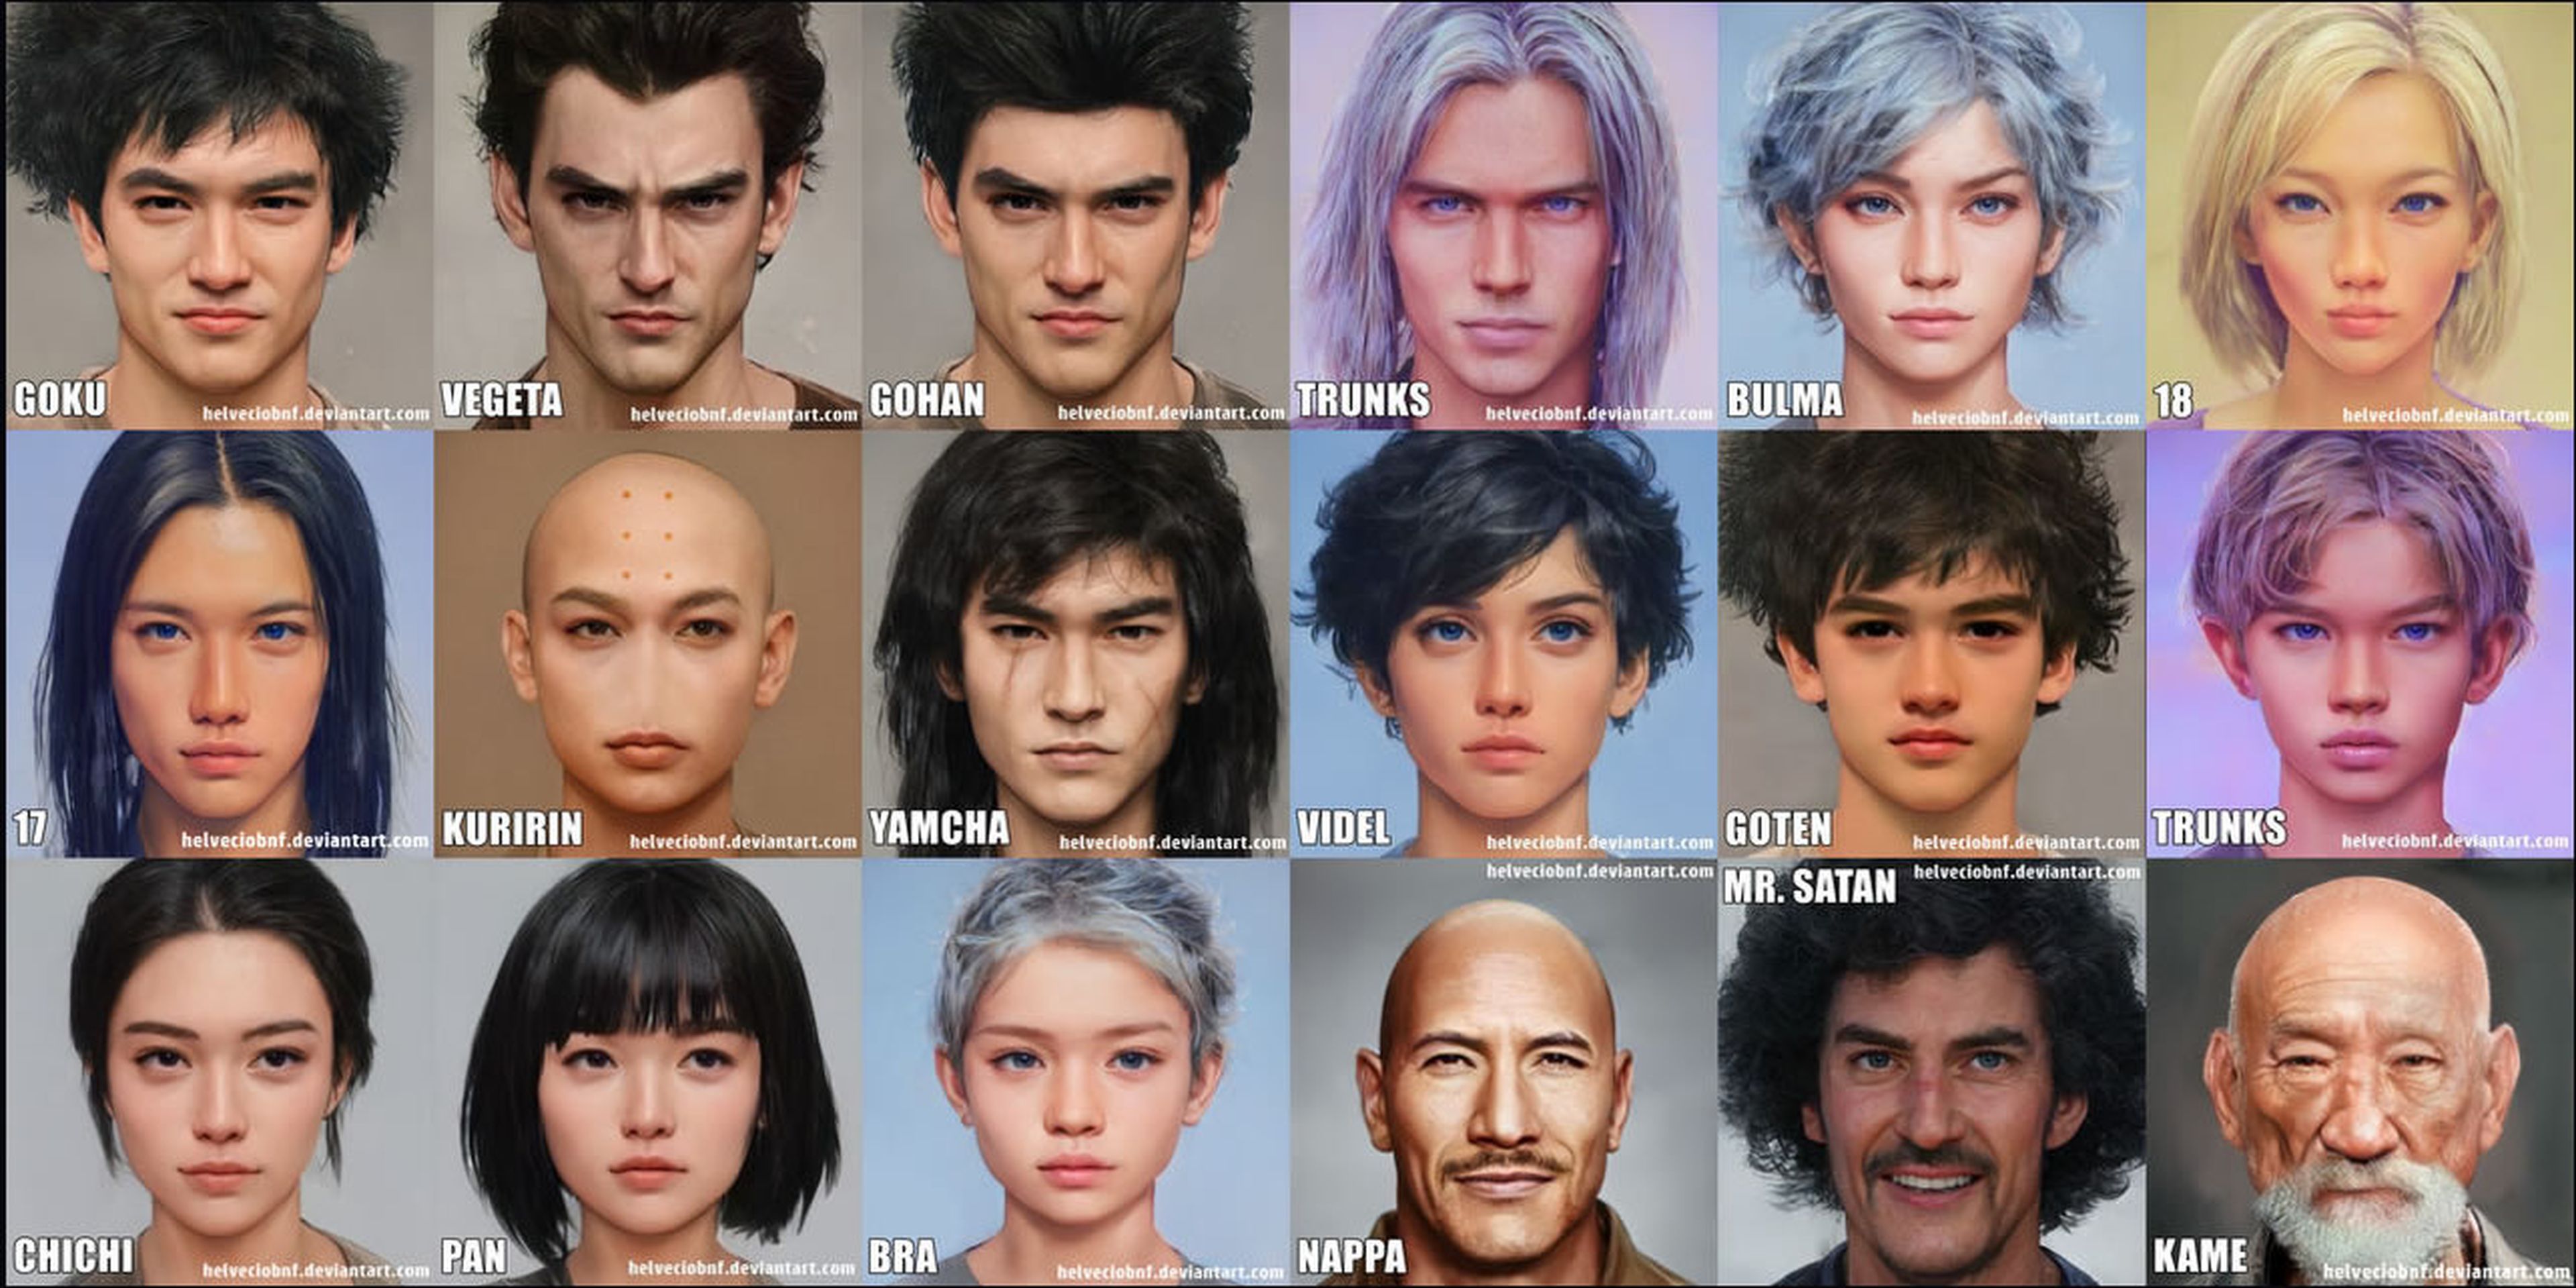 Personajes de Dragon Ball con aspecto realista